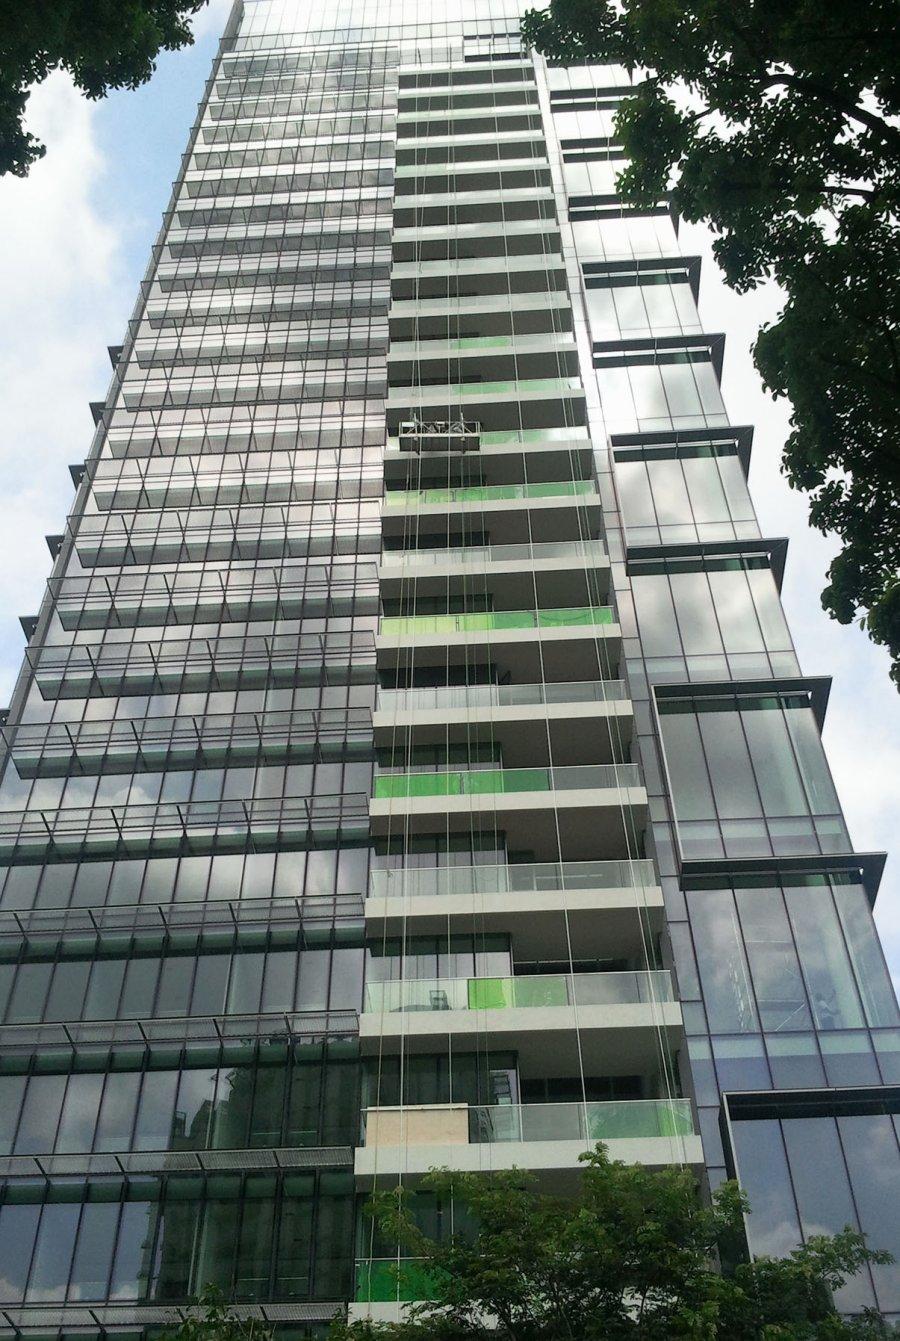 Bautafel The Marq, Appartement-Komplex Objektadresse : The Marq, 8 Paterson Hill, Singapore 238567 / The Marq, 8A Paterson Hill, Singapore 238568 Bauherr : SC Global Developments Pte Ltd